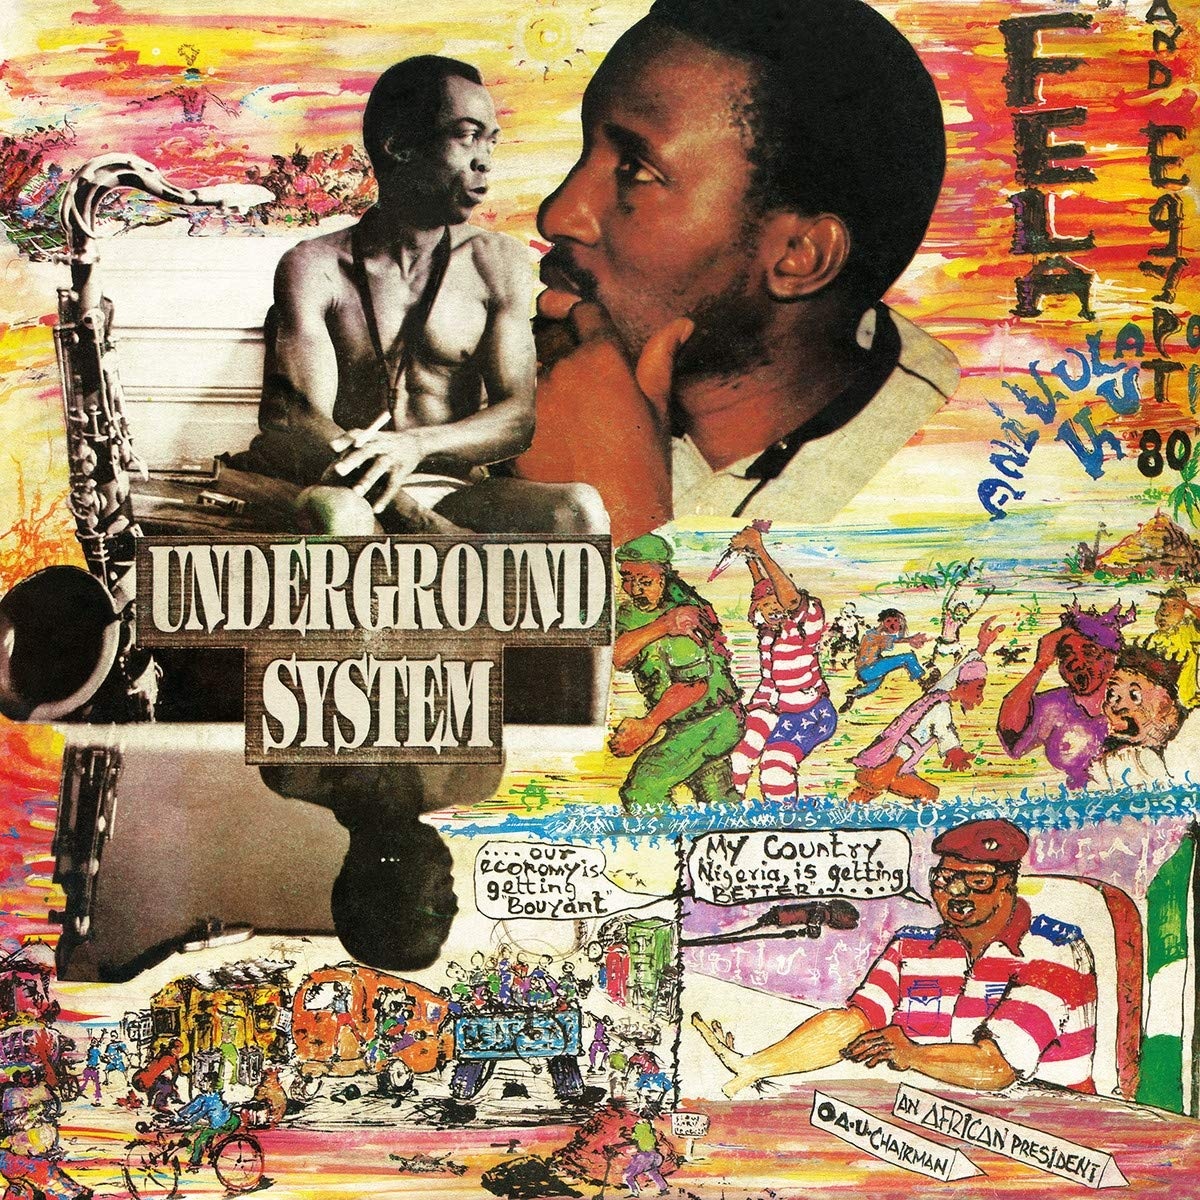 Underground system. Обложка андеграунд. Fela Kuti confusion. Fela Kuti confusion album Cover. Fela Kuti - open & close.